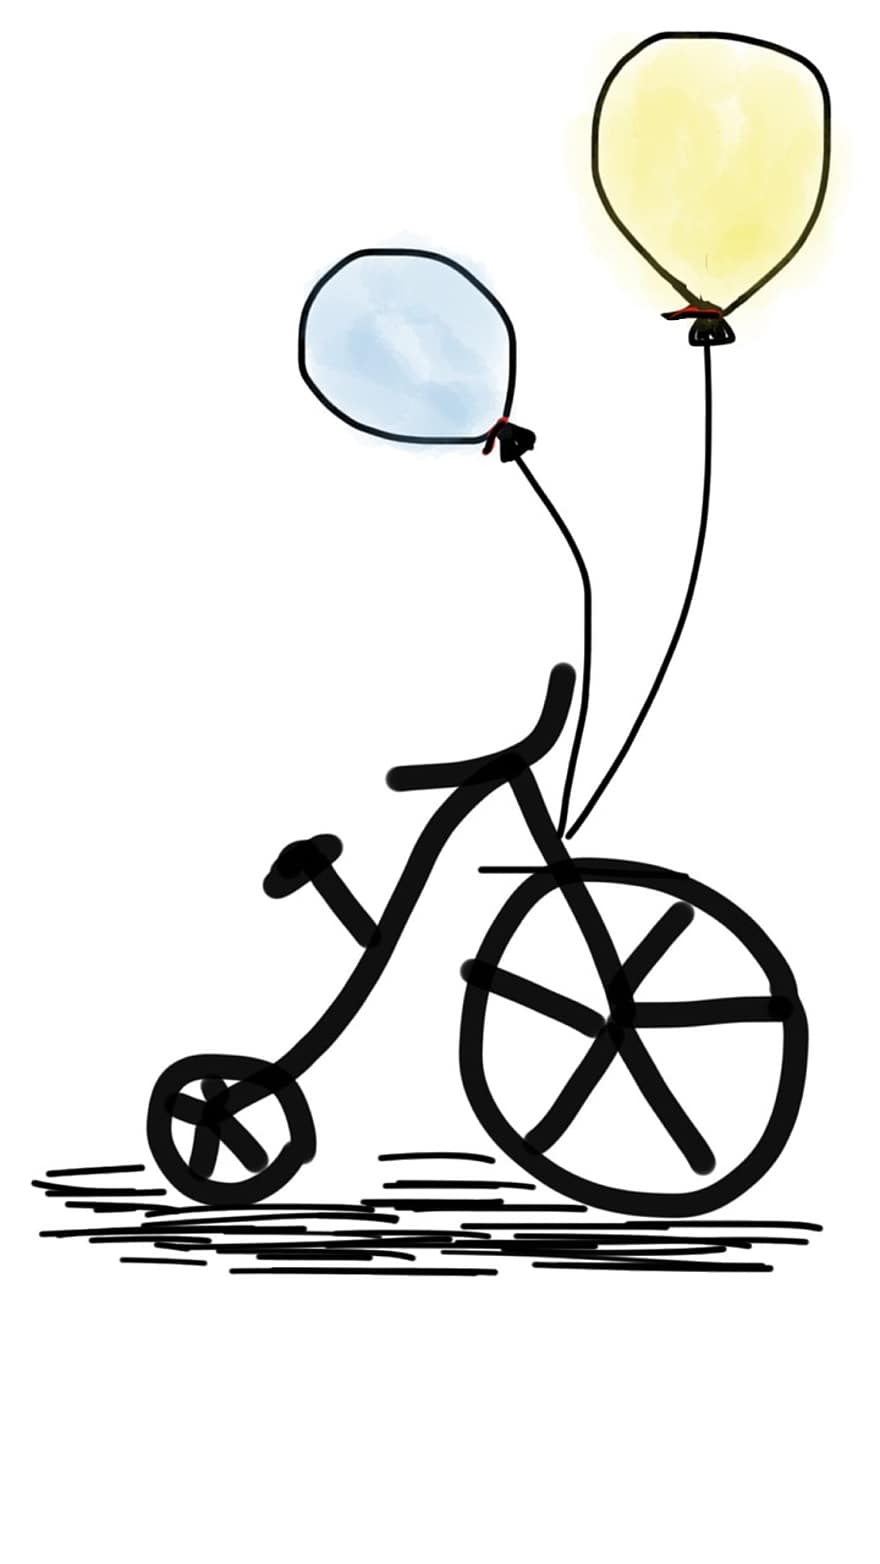 Bike, Bicycle, Balloon, Yellow Balloon, Blue Balloon, Lifestyle, Bike Riding, Biking, Cycling, Sport, Ride